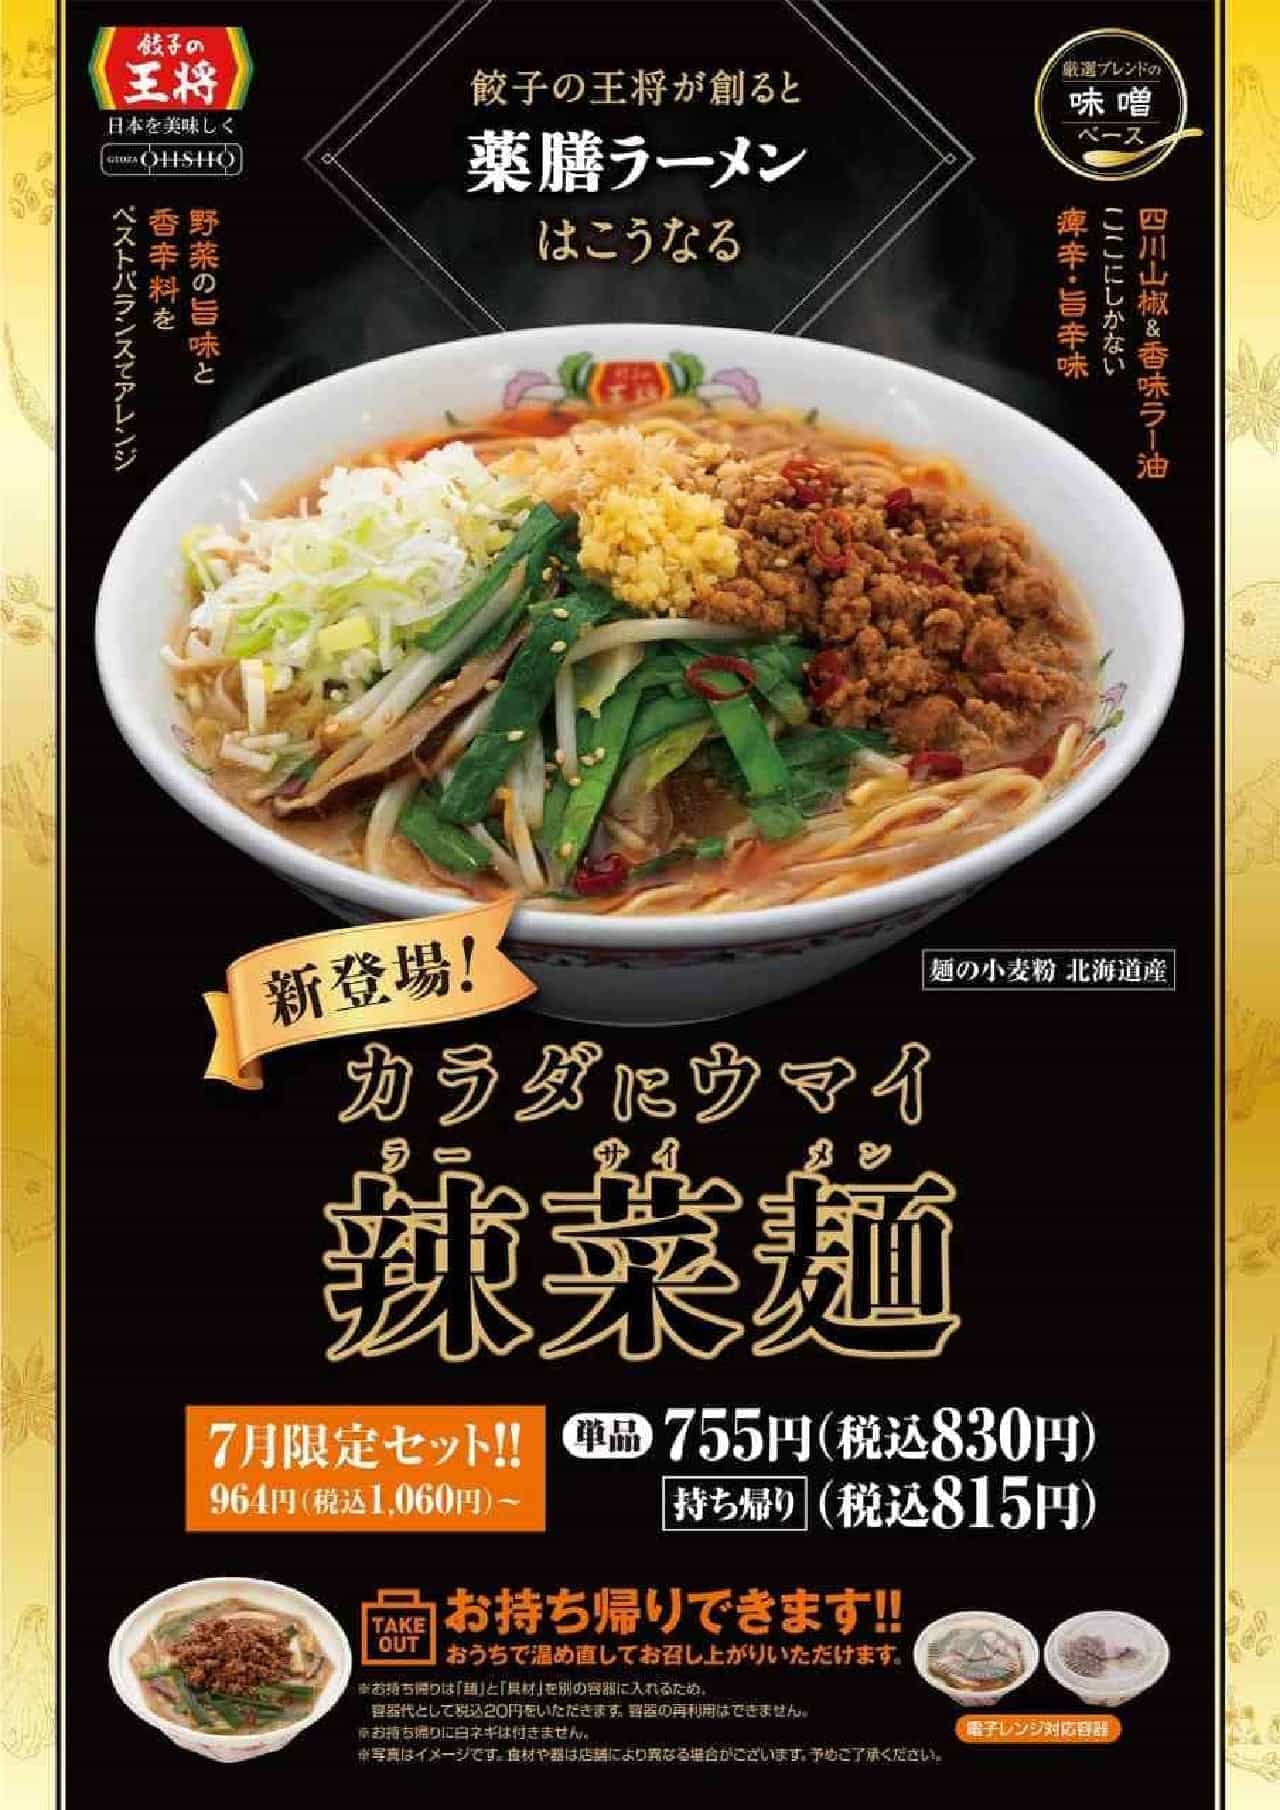 Gyoza no Ousho "Rasai Men" (hot spicy noodles)